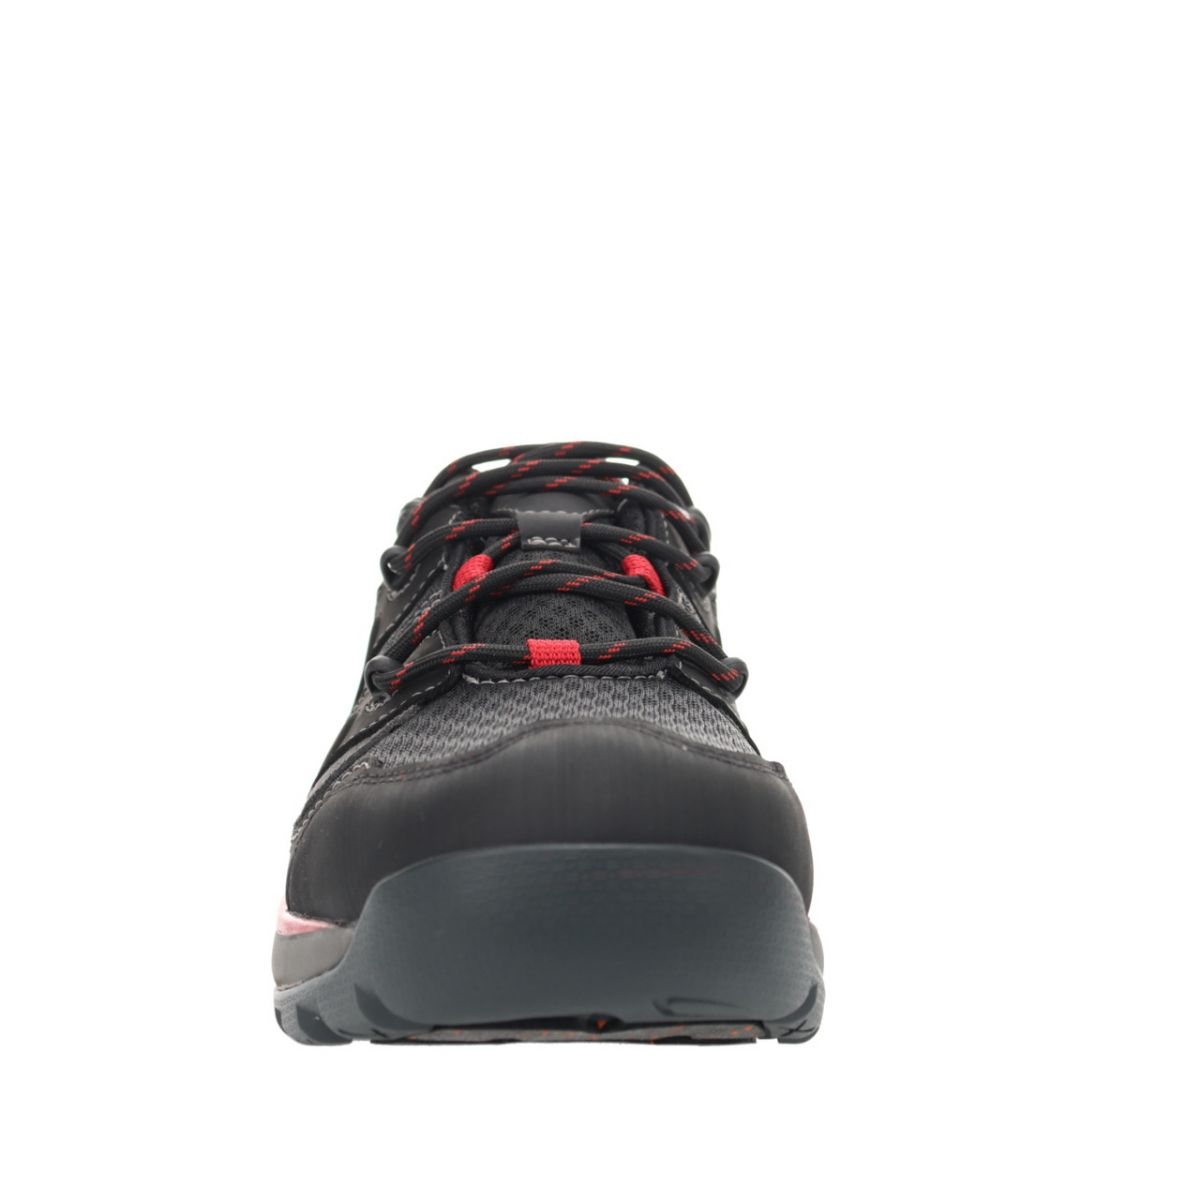 Propet Men's Vercors Hiking Shoe Black/Red - MOA002SBRD BLACK/RED - BLACK/RED, 9.5